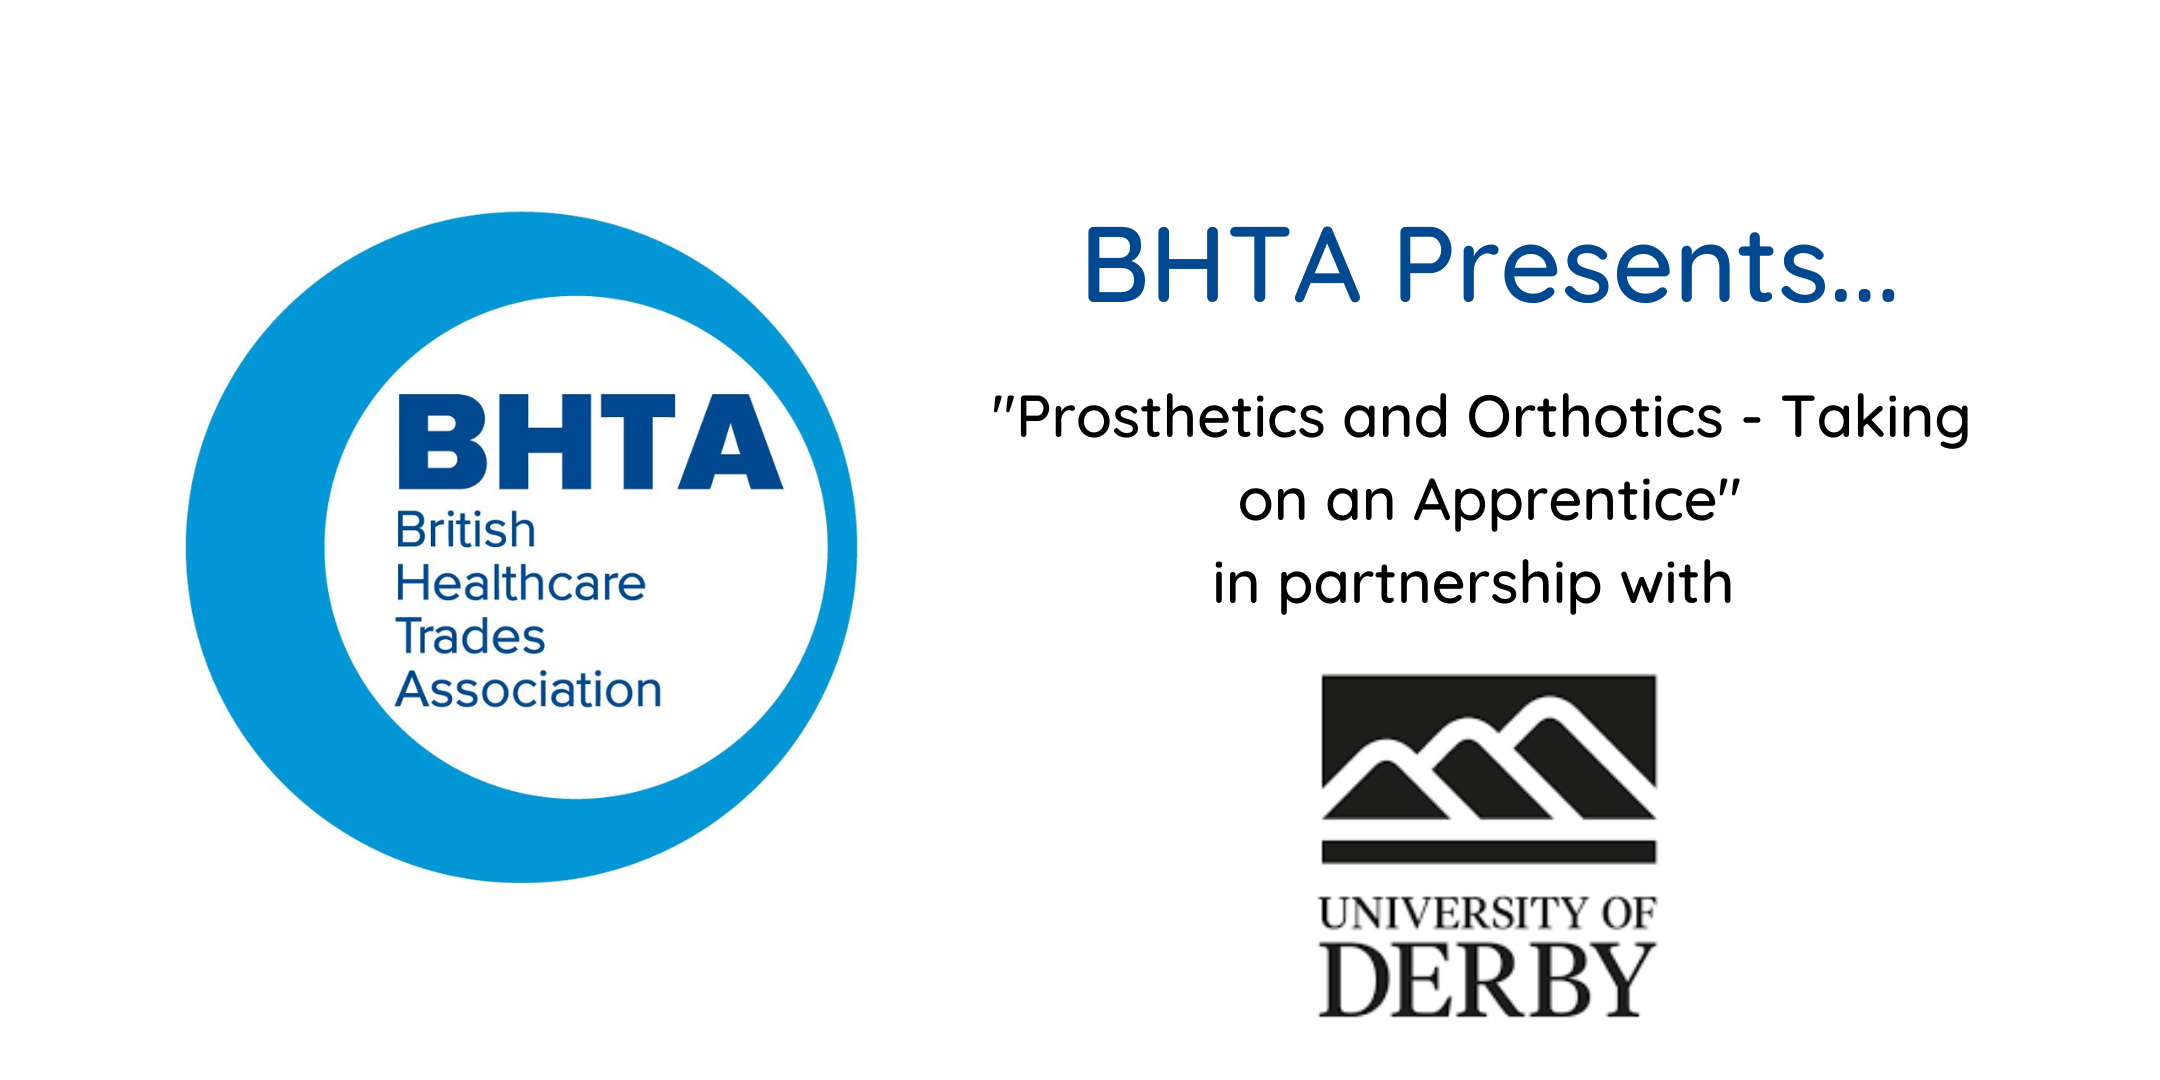 BHTA presents... "Orthotics and Prosthetics - Taking on an Apprentice"